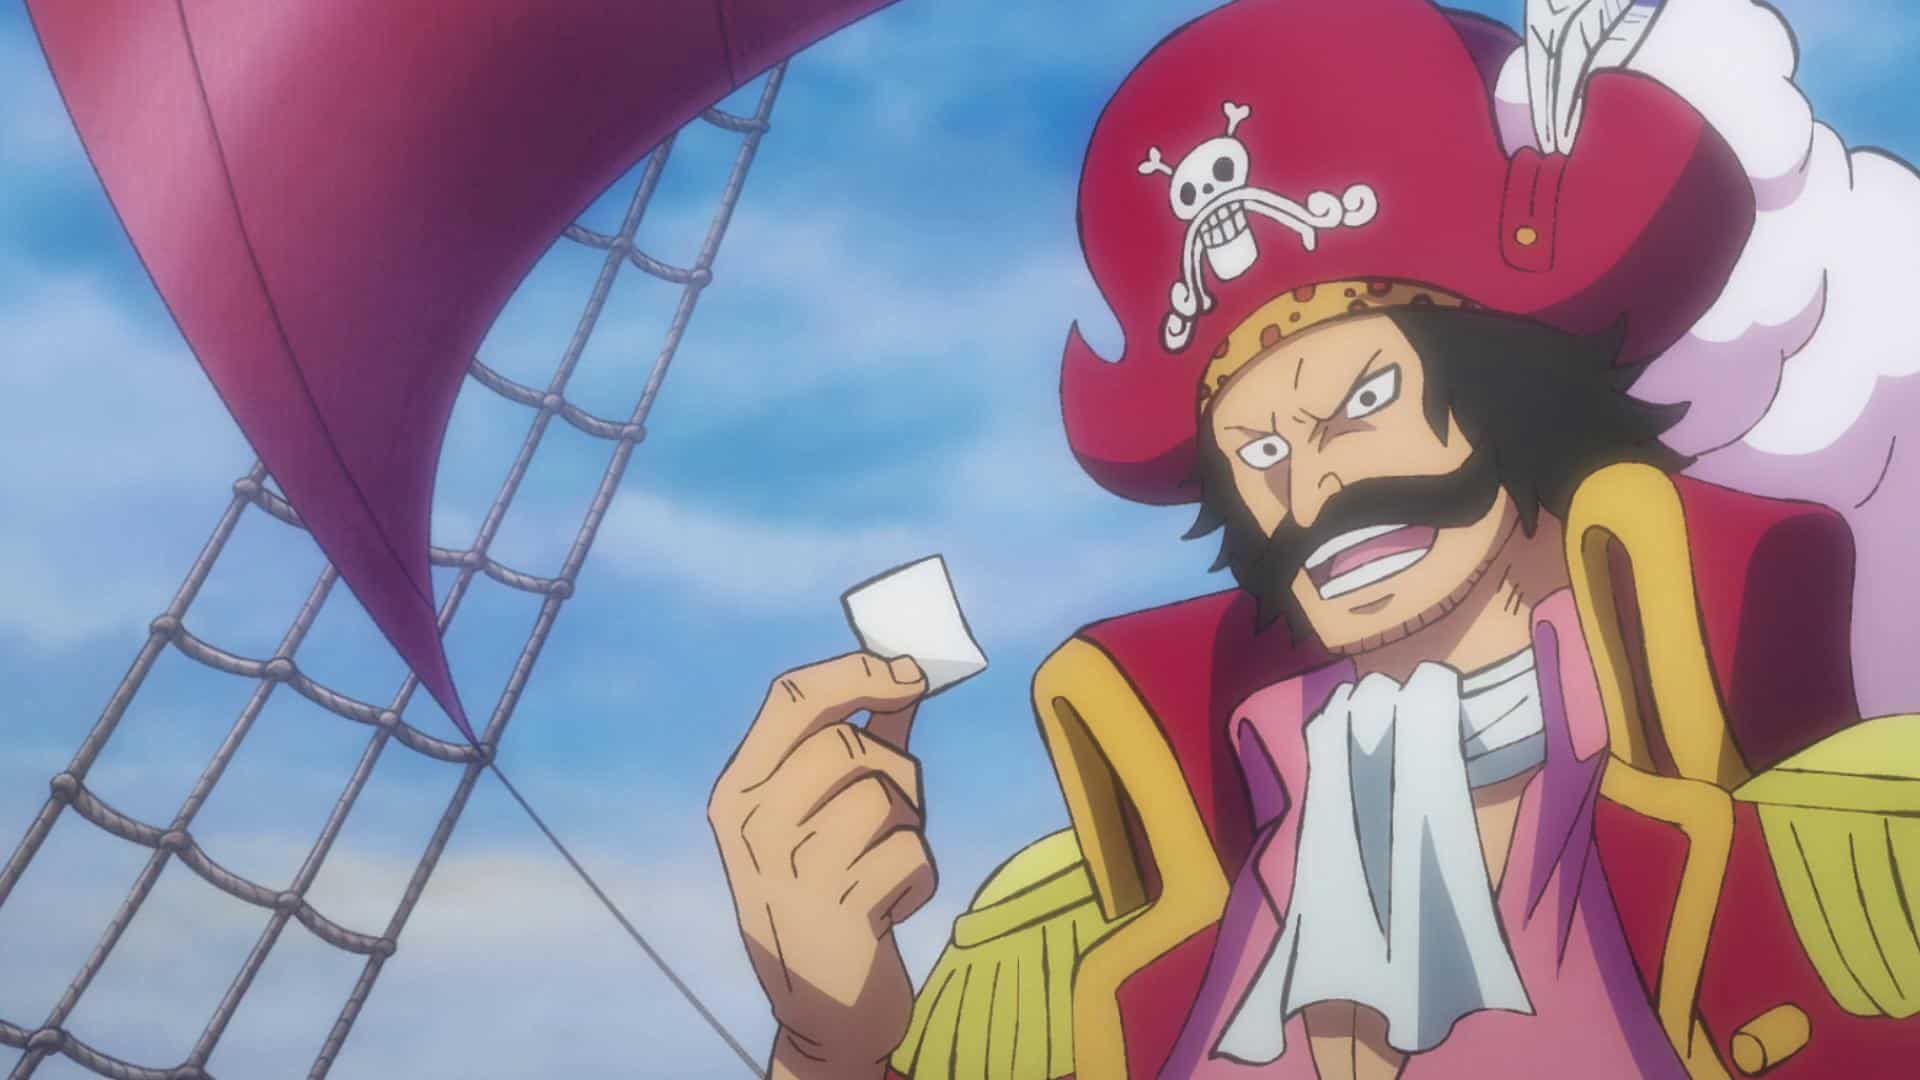 Pirate king Gol D. Roger